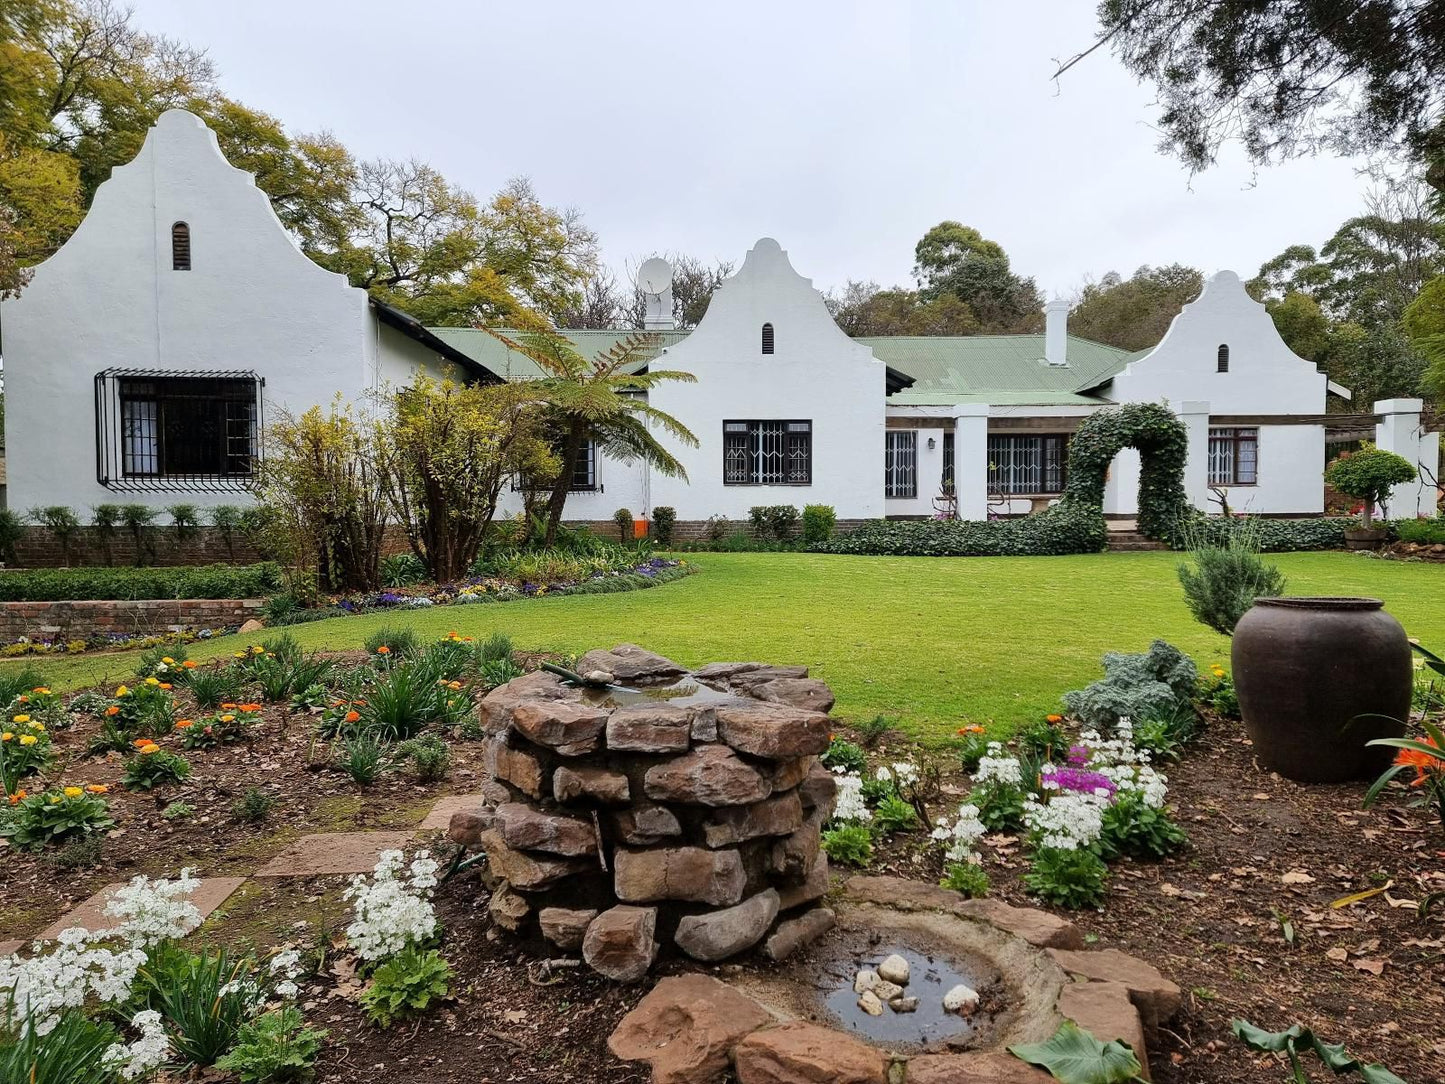 Casalinga La Casa And Restaurant Muldersdrift Gauteng South Africa House, Building, Architecture, Garden, Nature, Plant